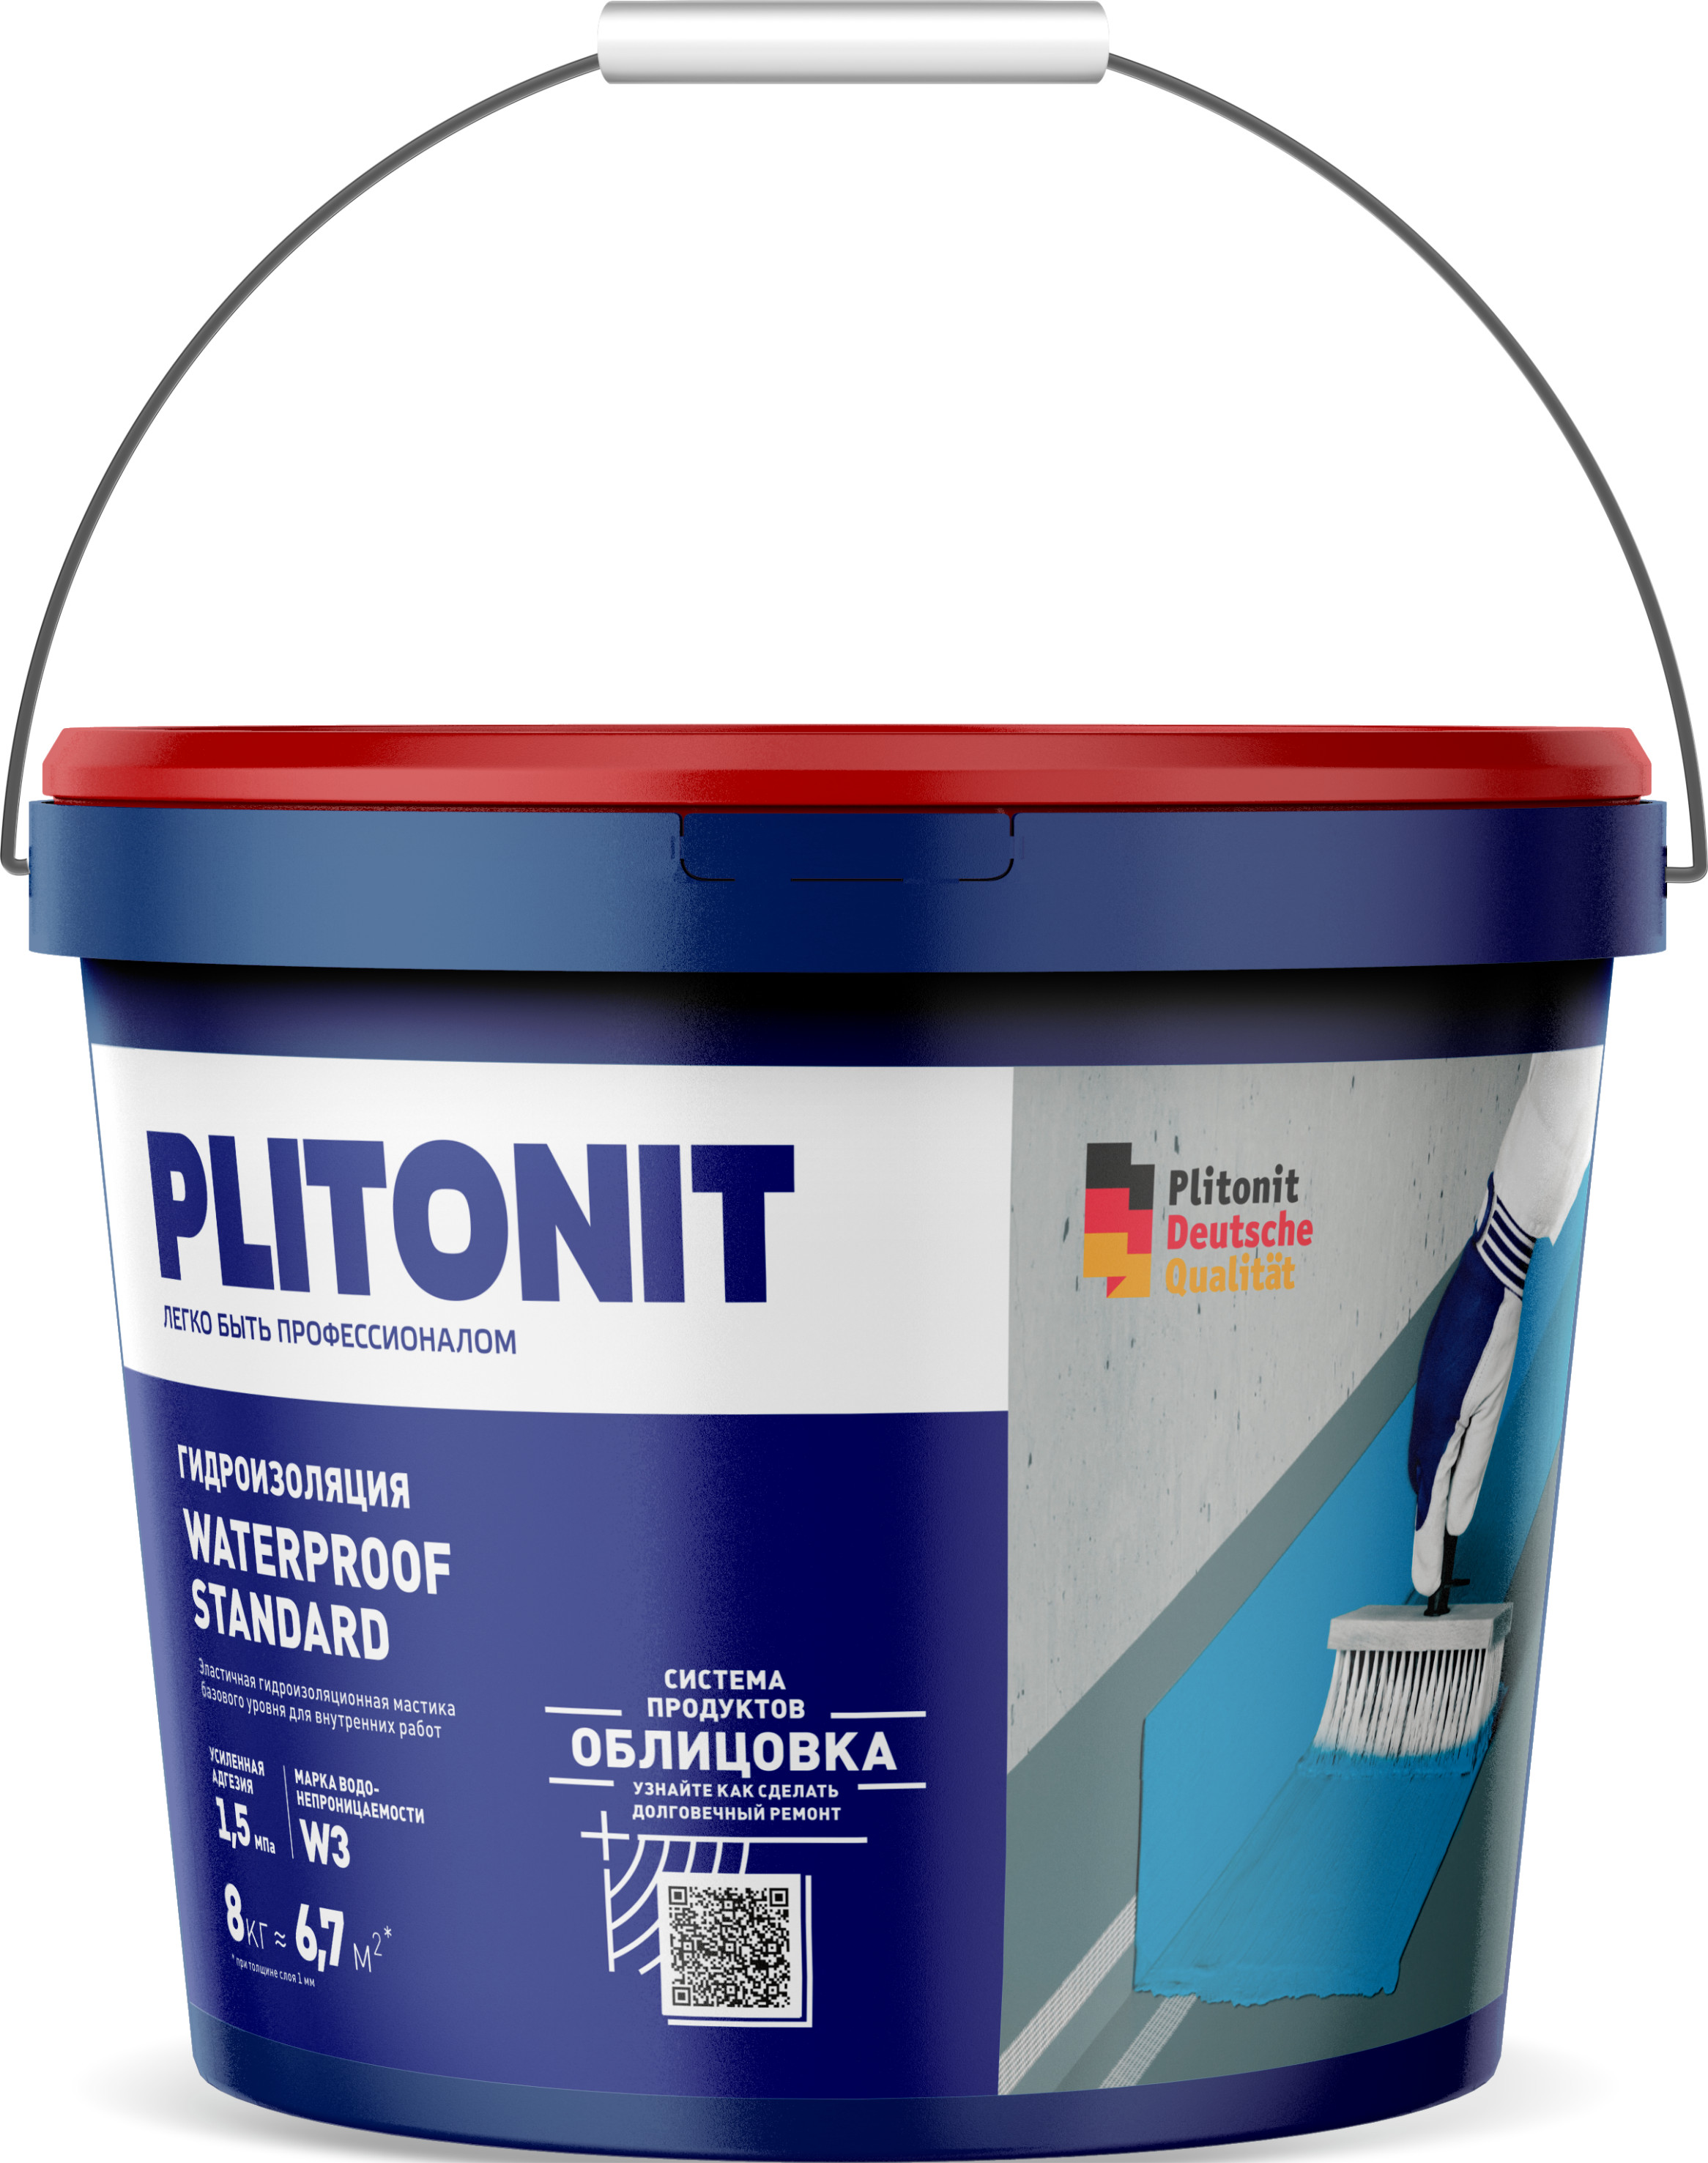 PLITONIT WaterProof Standard - 8 эластичная гидроизоляционная мастика базового уровня для внутренних работ